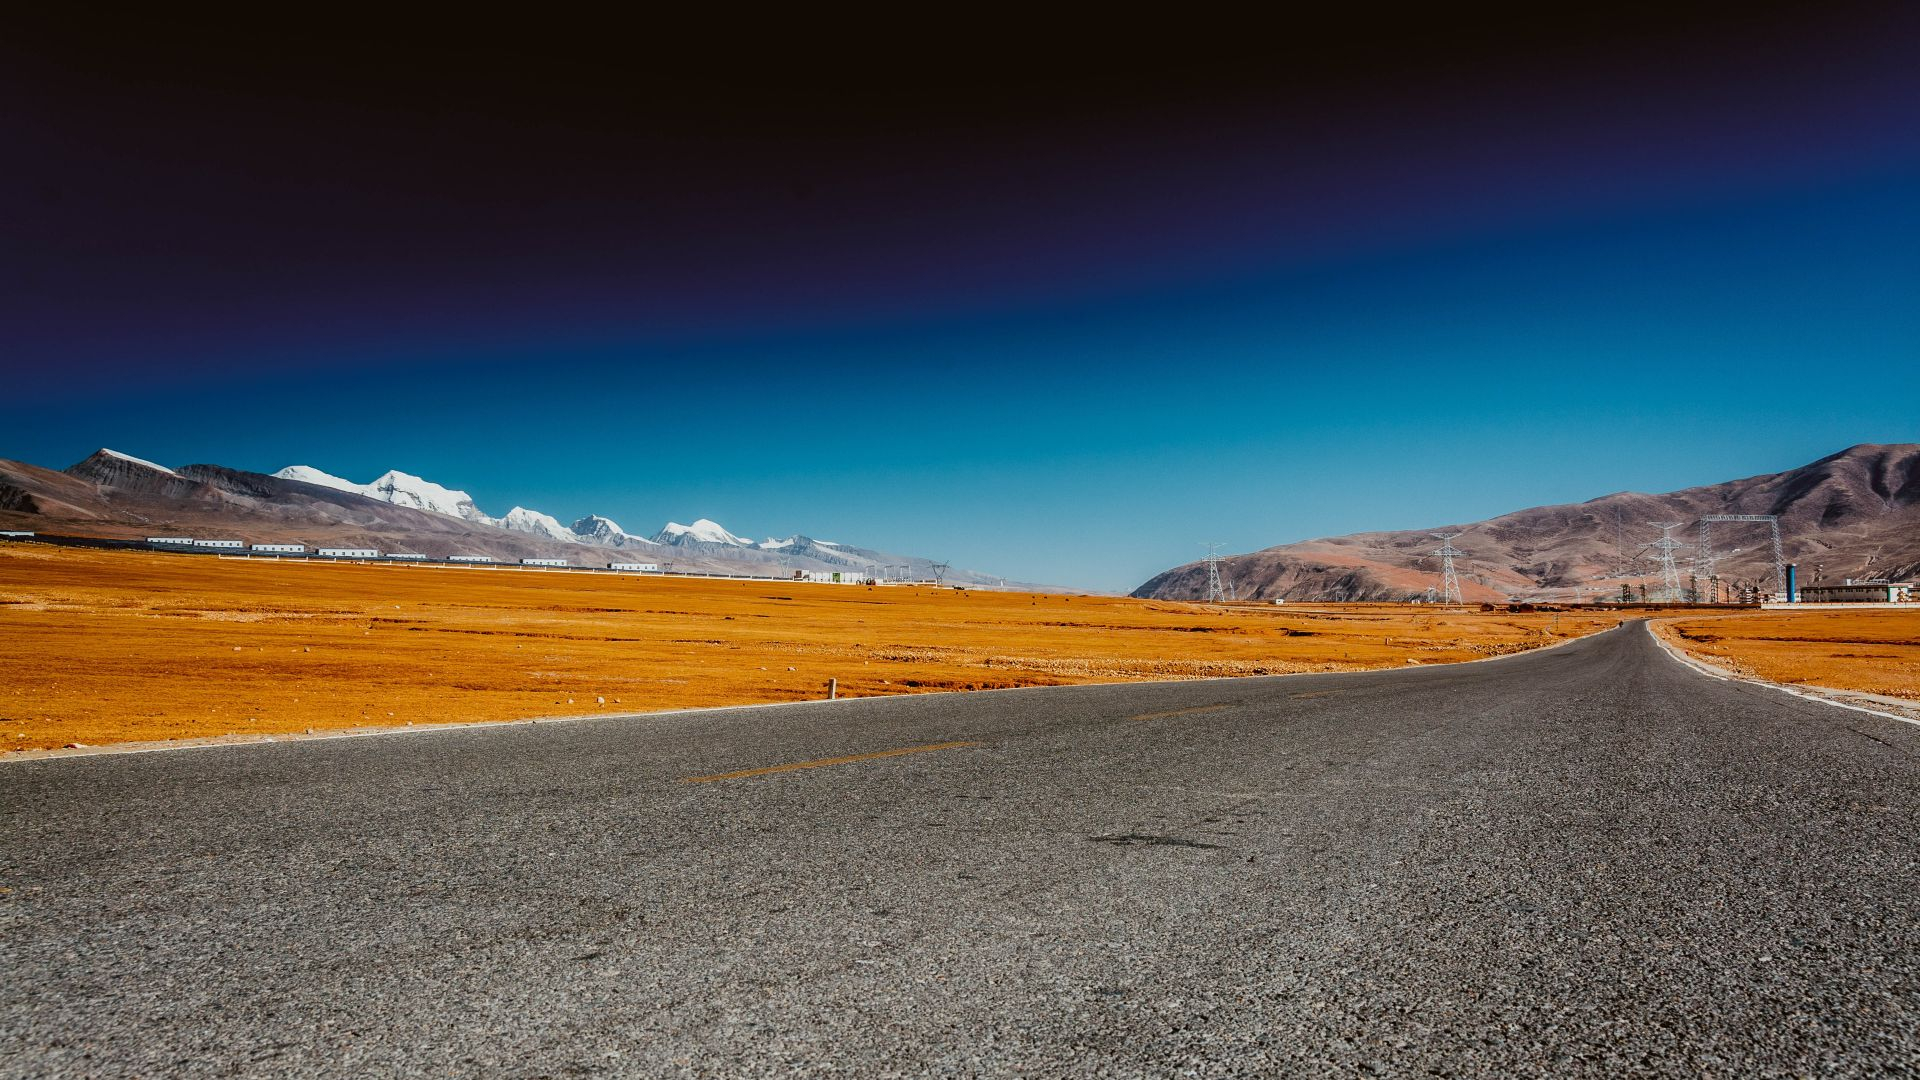 1920x1080 Desktop Wallpaper Tibet Highway, Road, Landscape, Hd Image, Picture, Background, S5dsvc